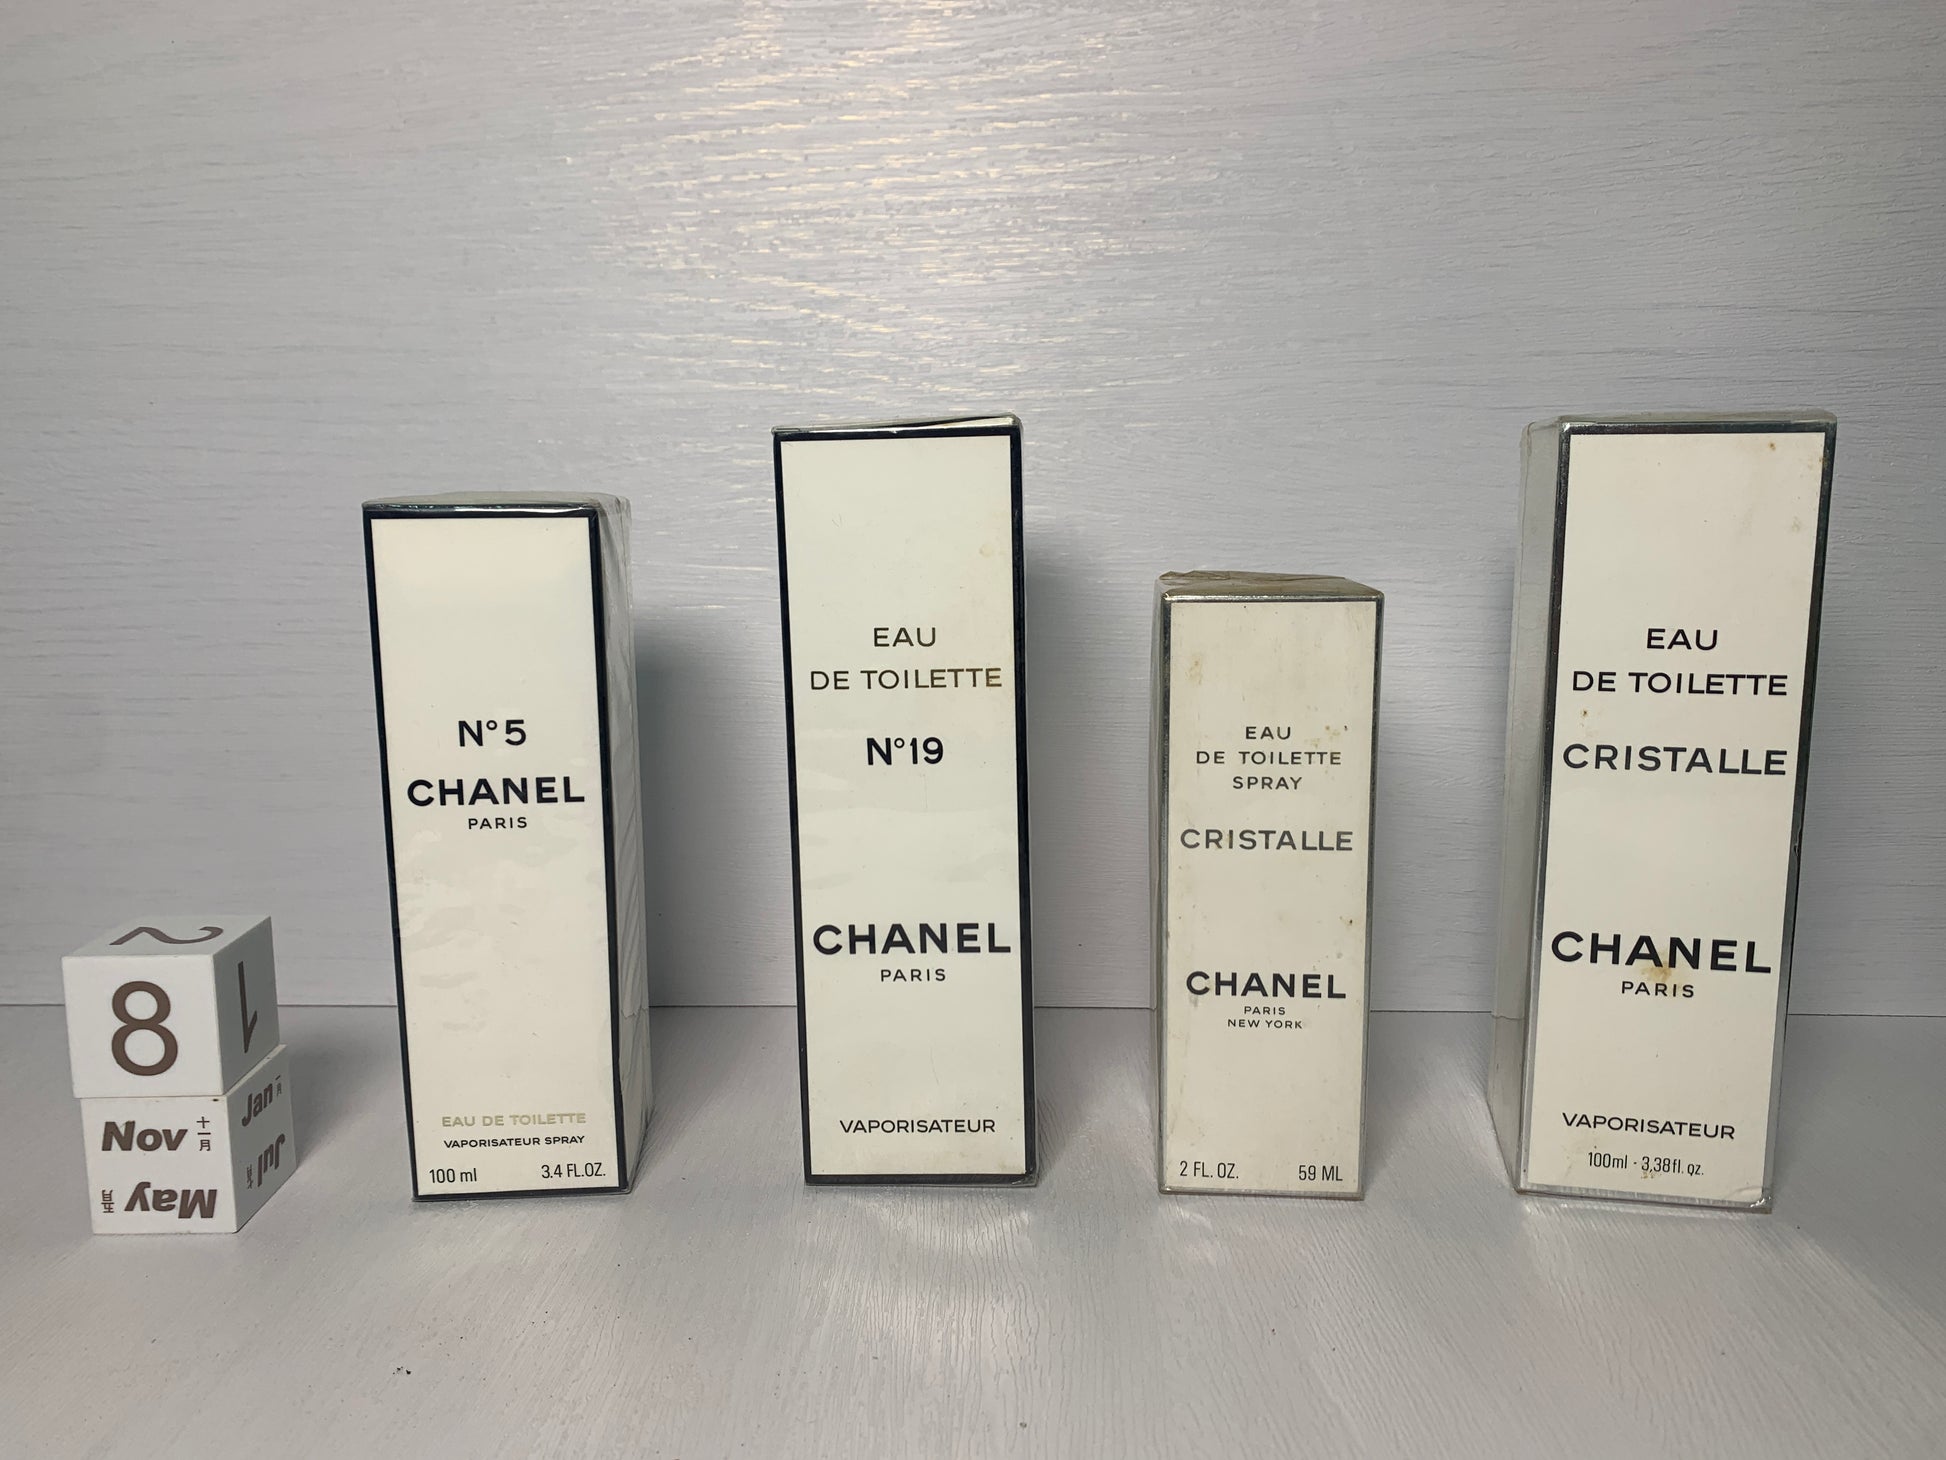 Women's Perfume Cristalle Eau Verte Chanel EDT